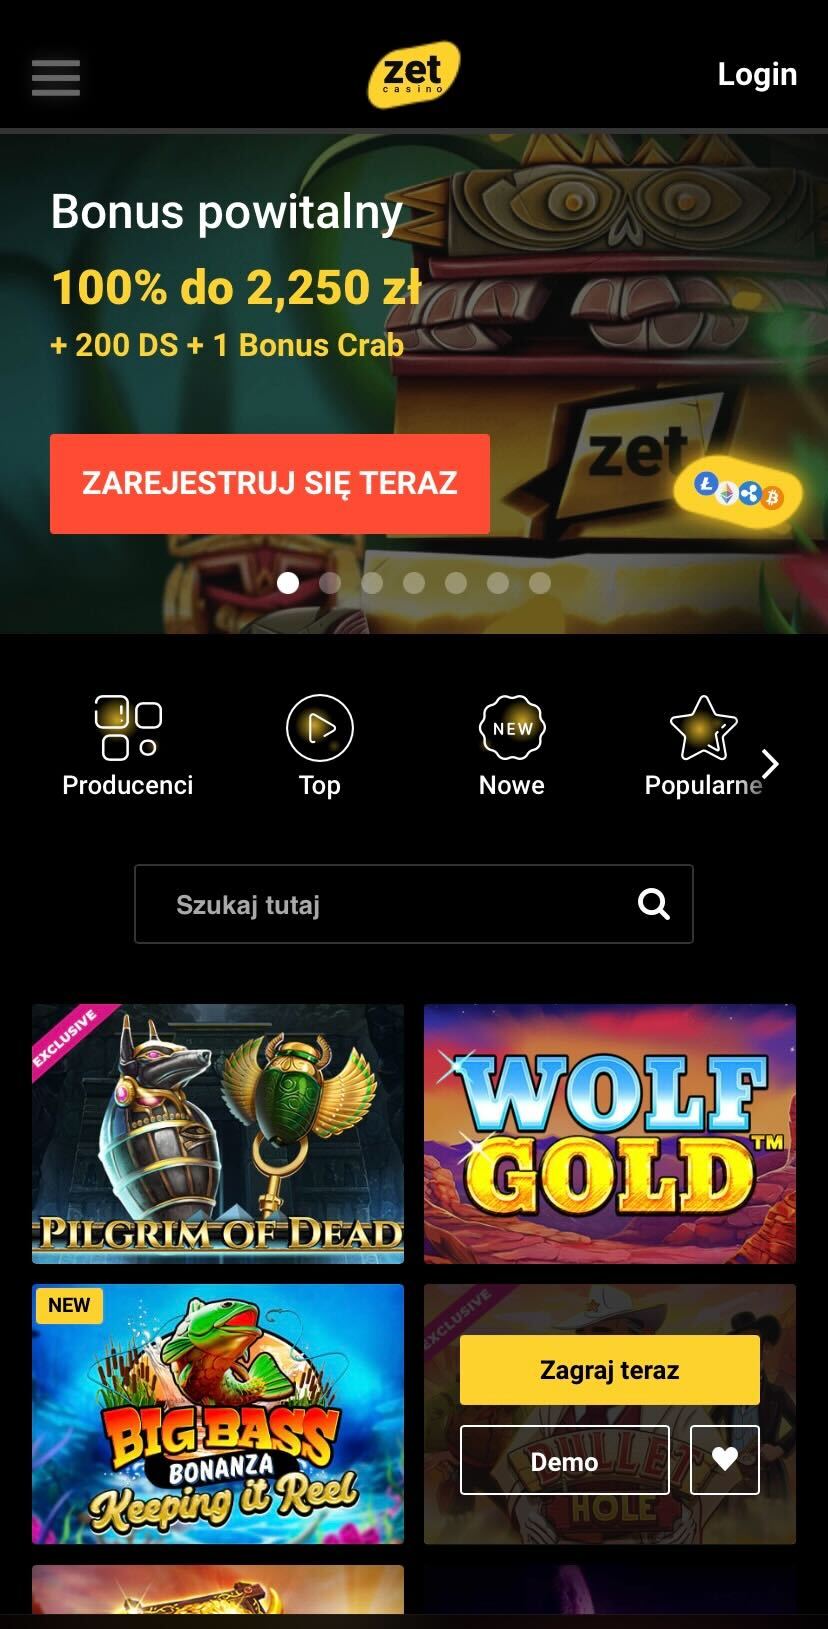 Zet Casino Mobile Review